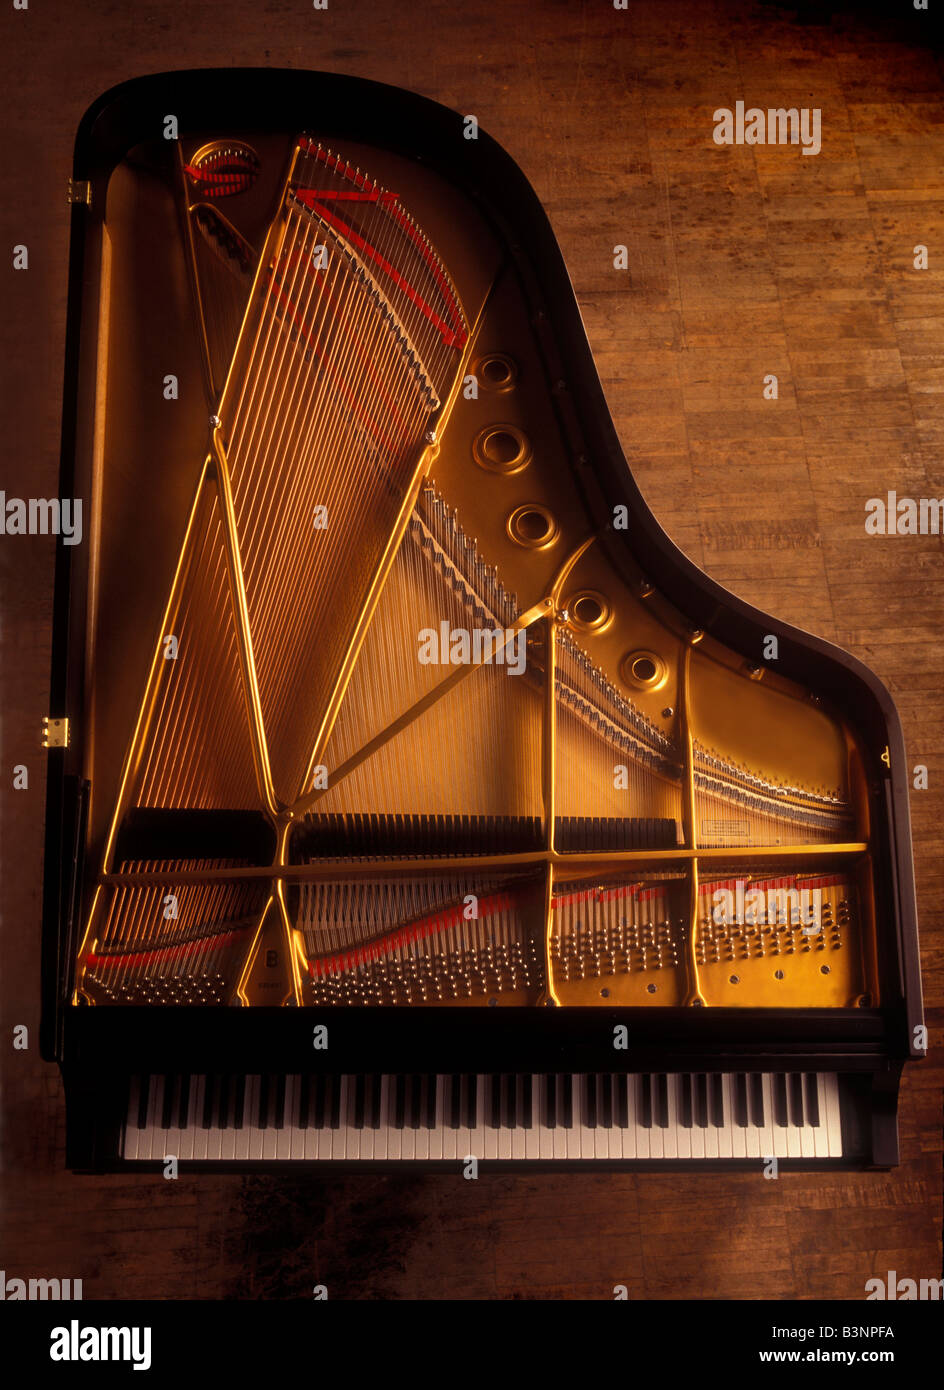 Top piano from above fotografías e imágenes de alta resolución - Alamy